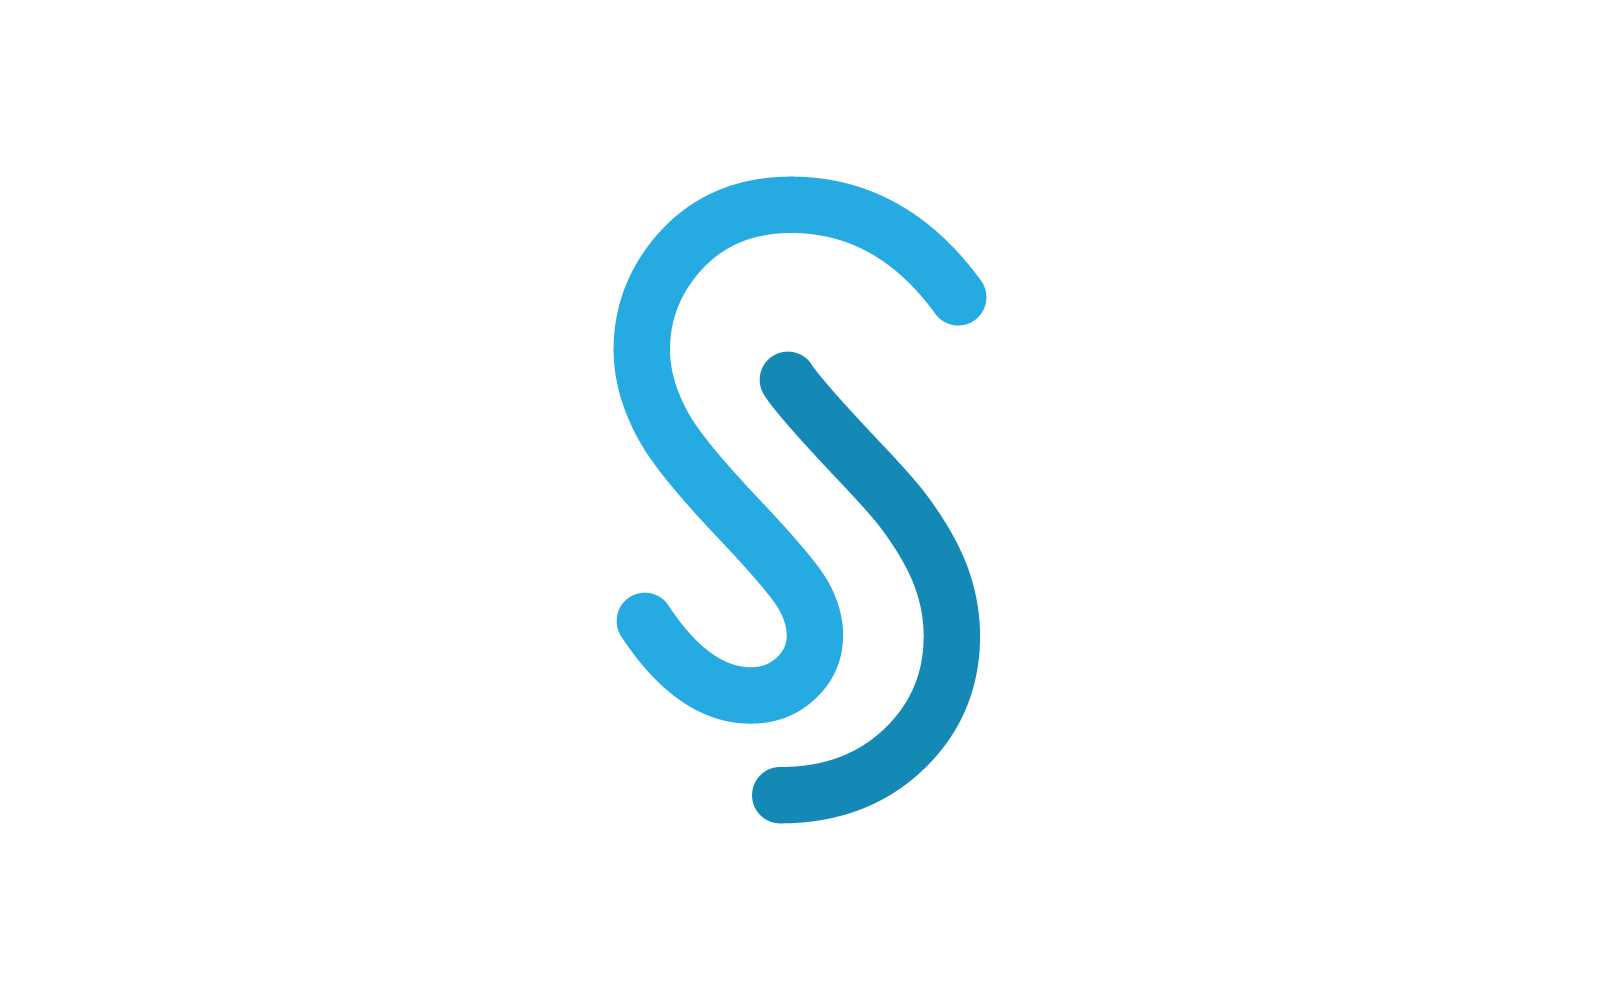 S Initial letter alphabet font logo vector design